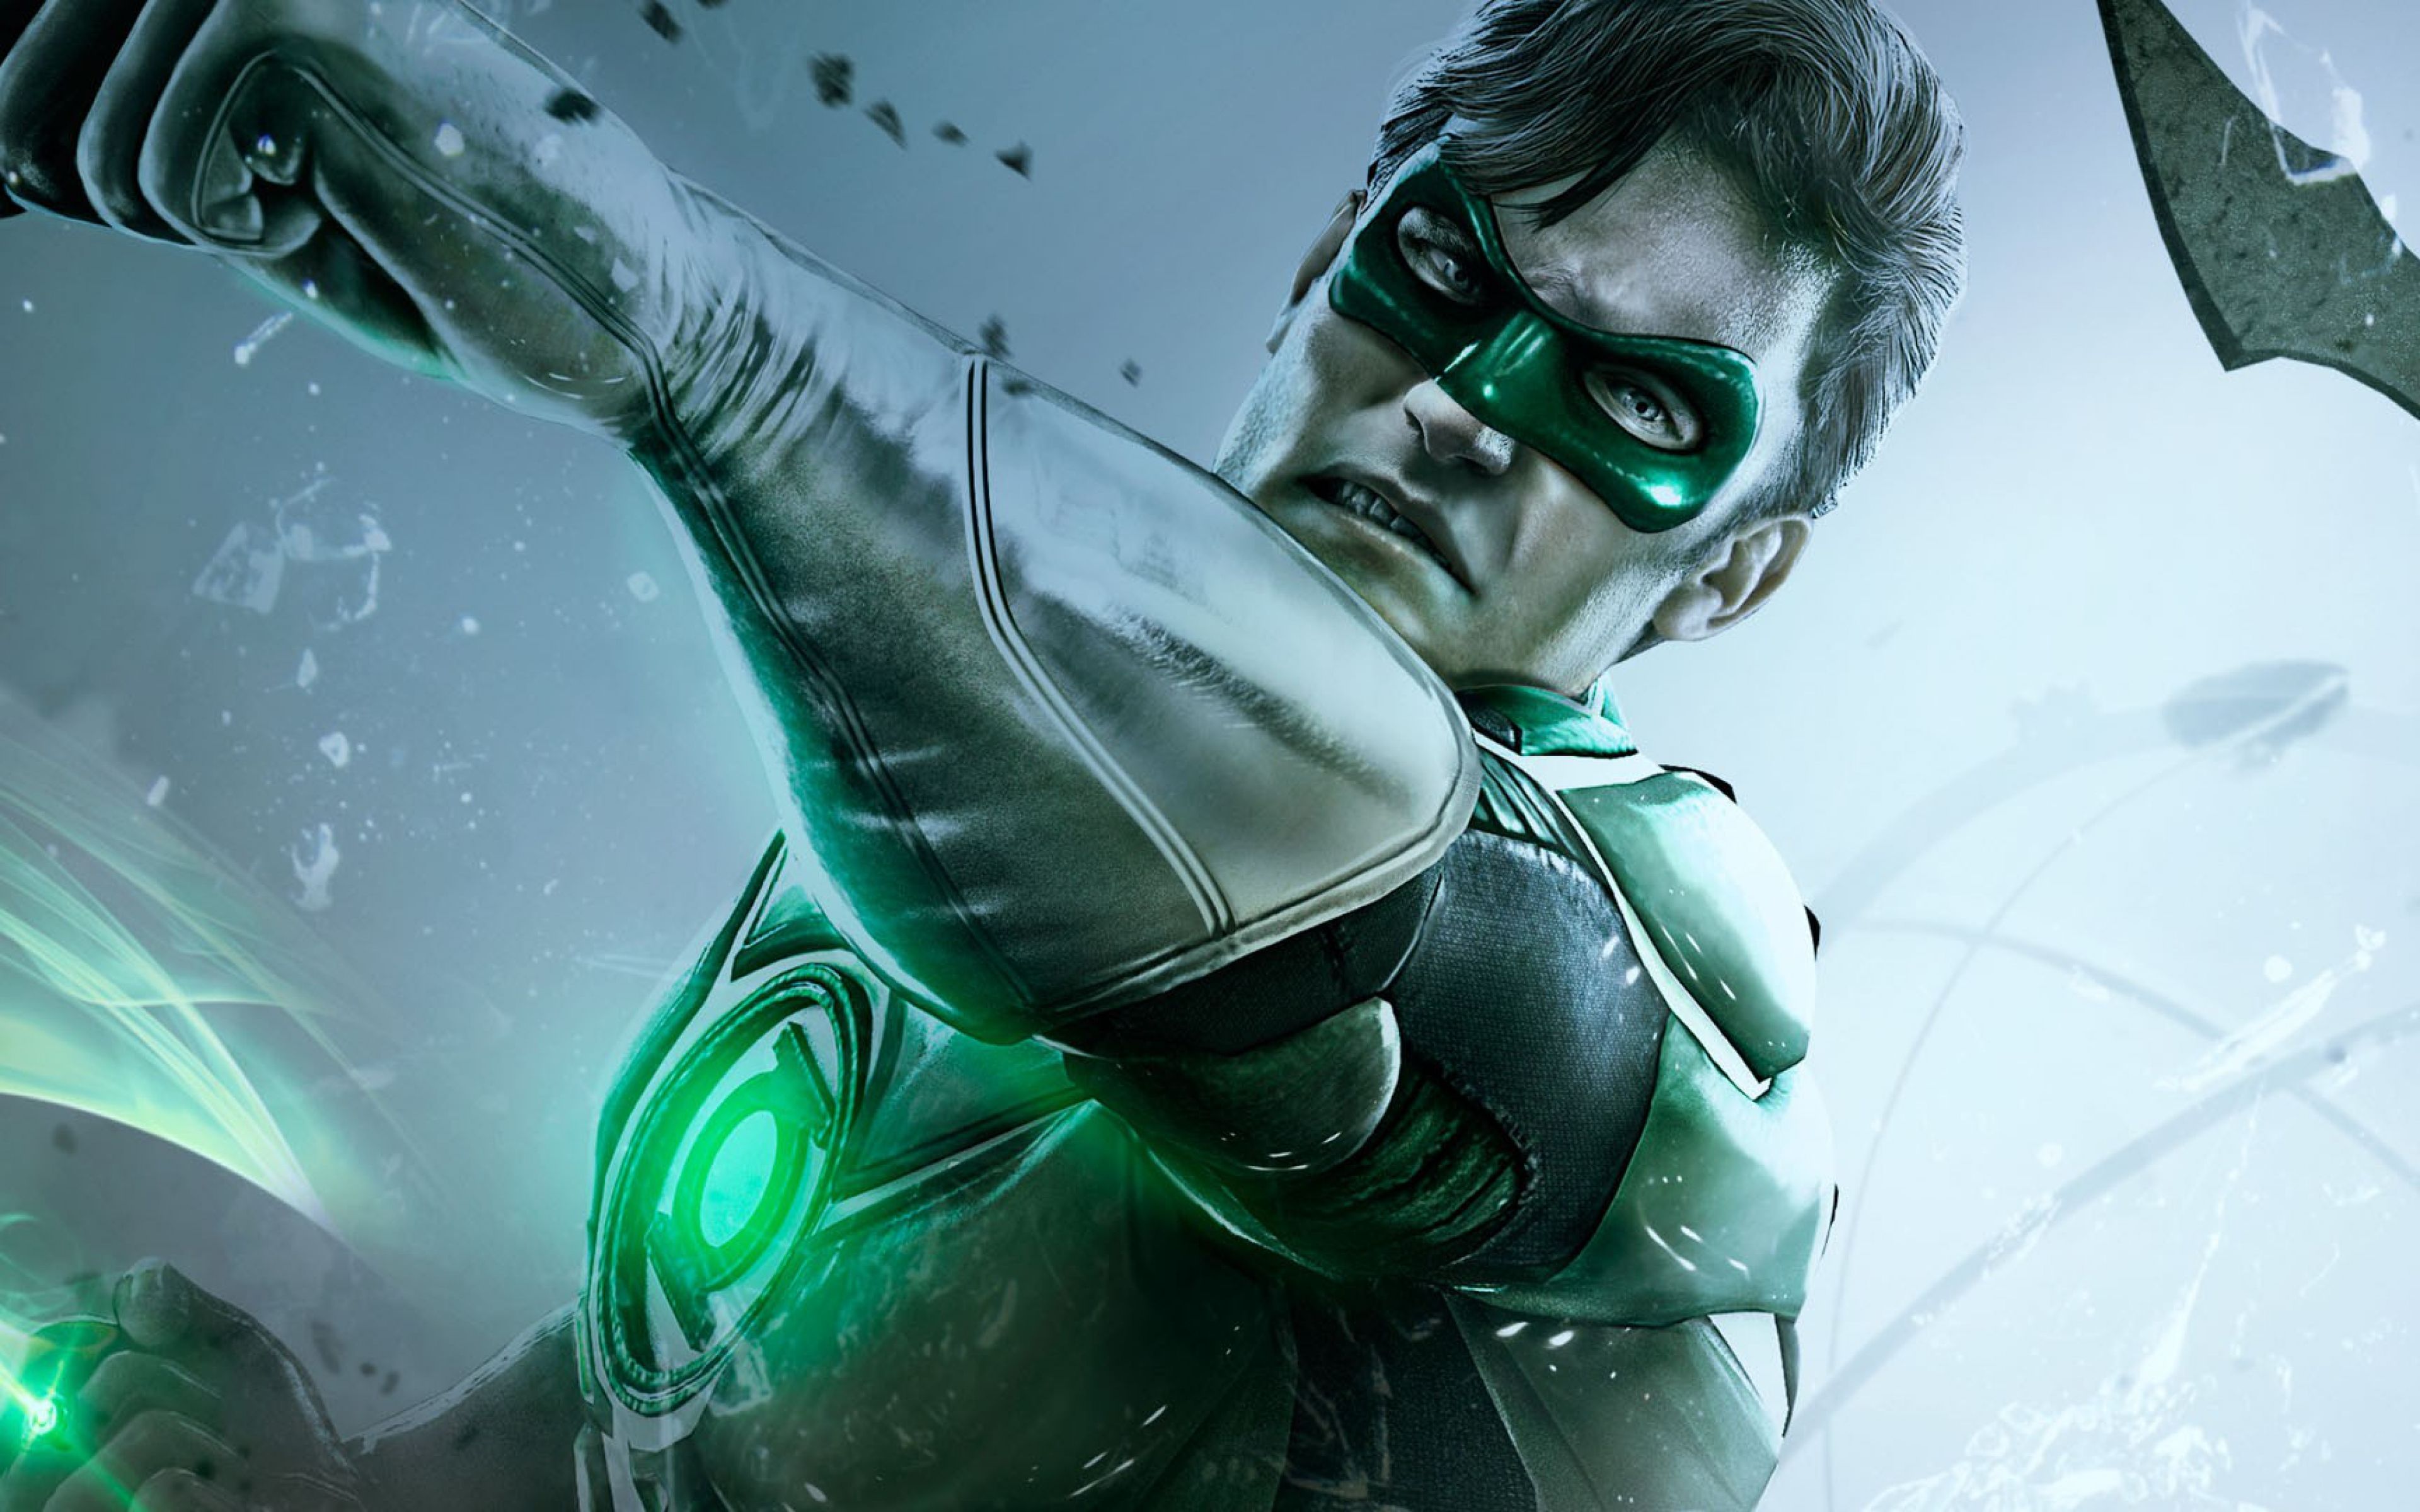 Green Lantern Wallpaper Free Download